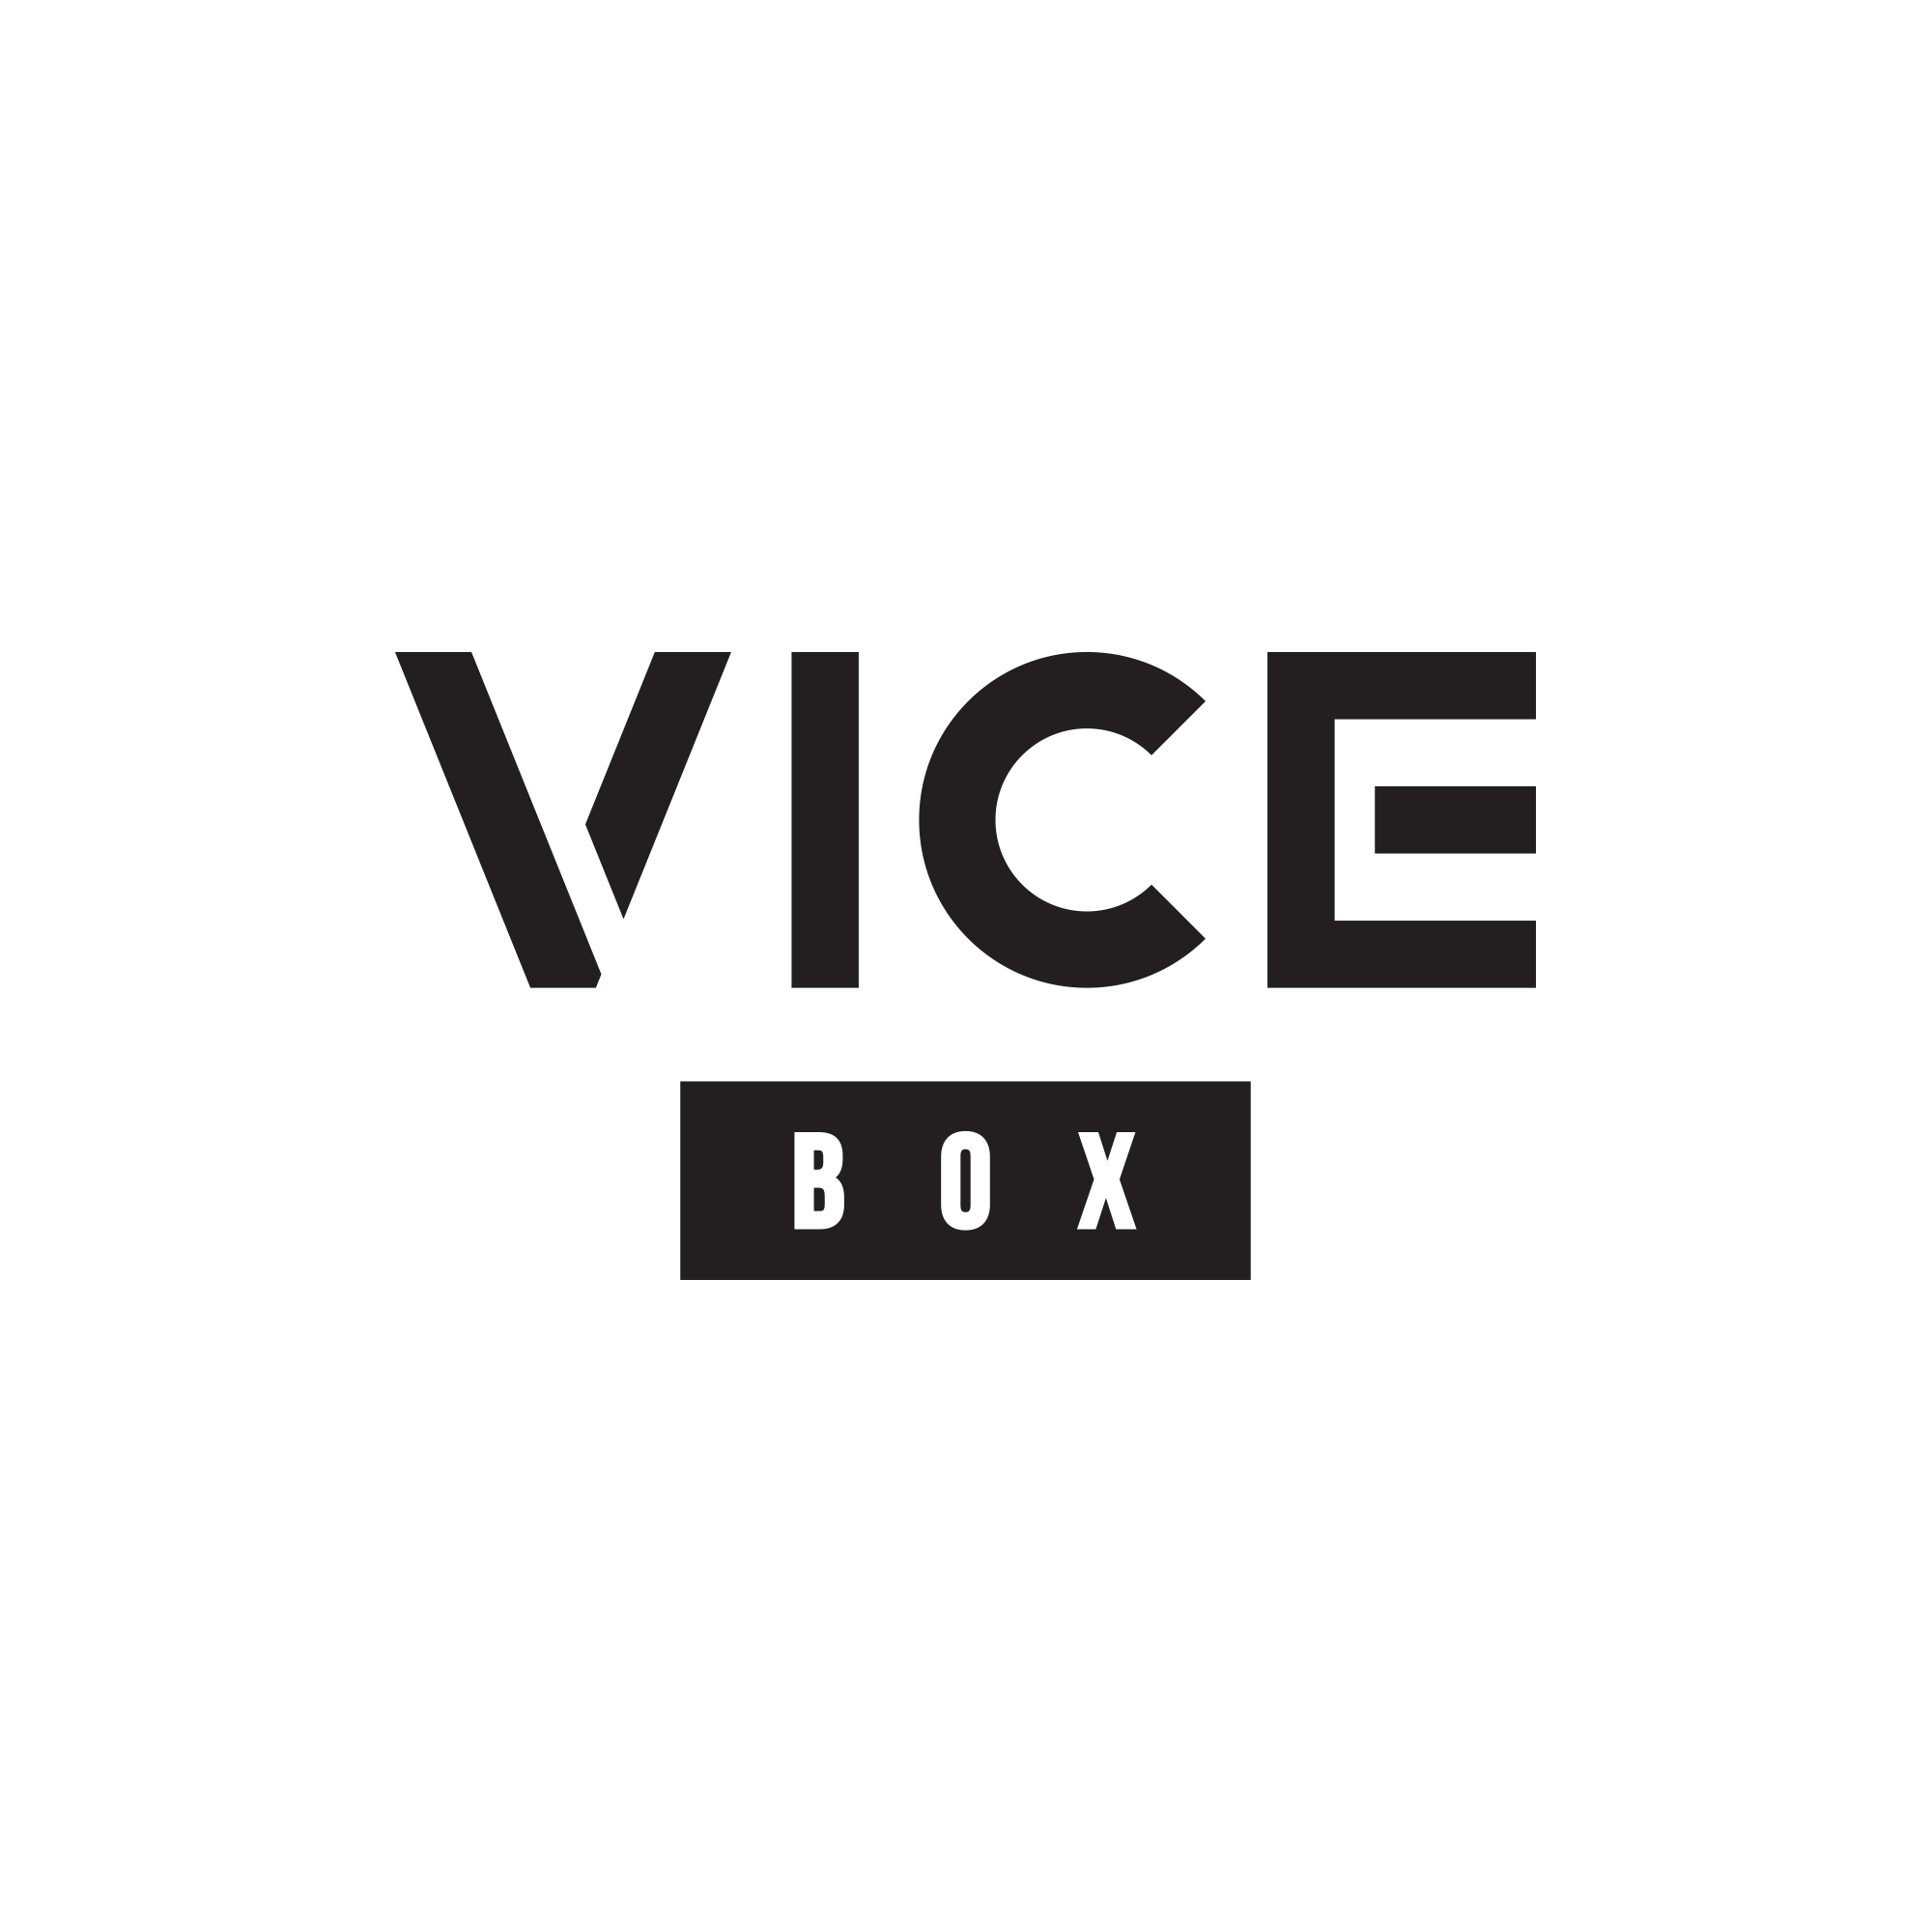 VICE Box - Logo 1